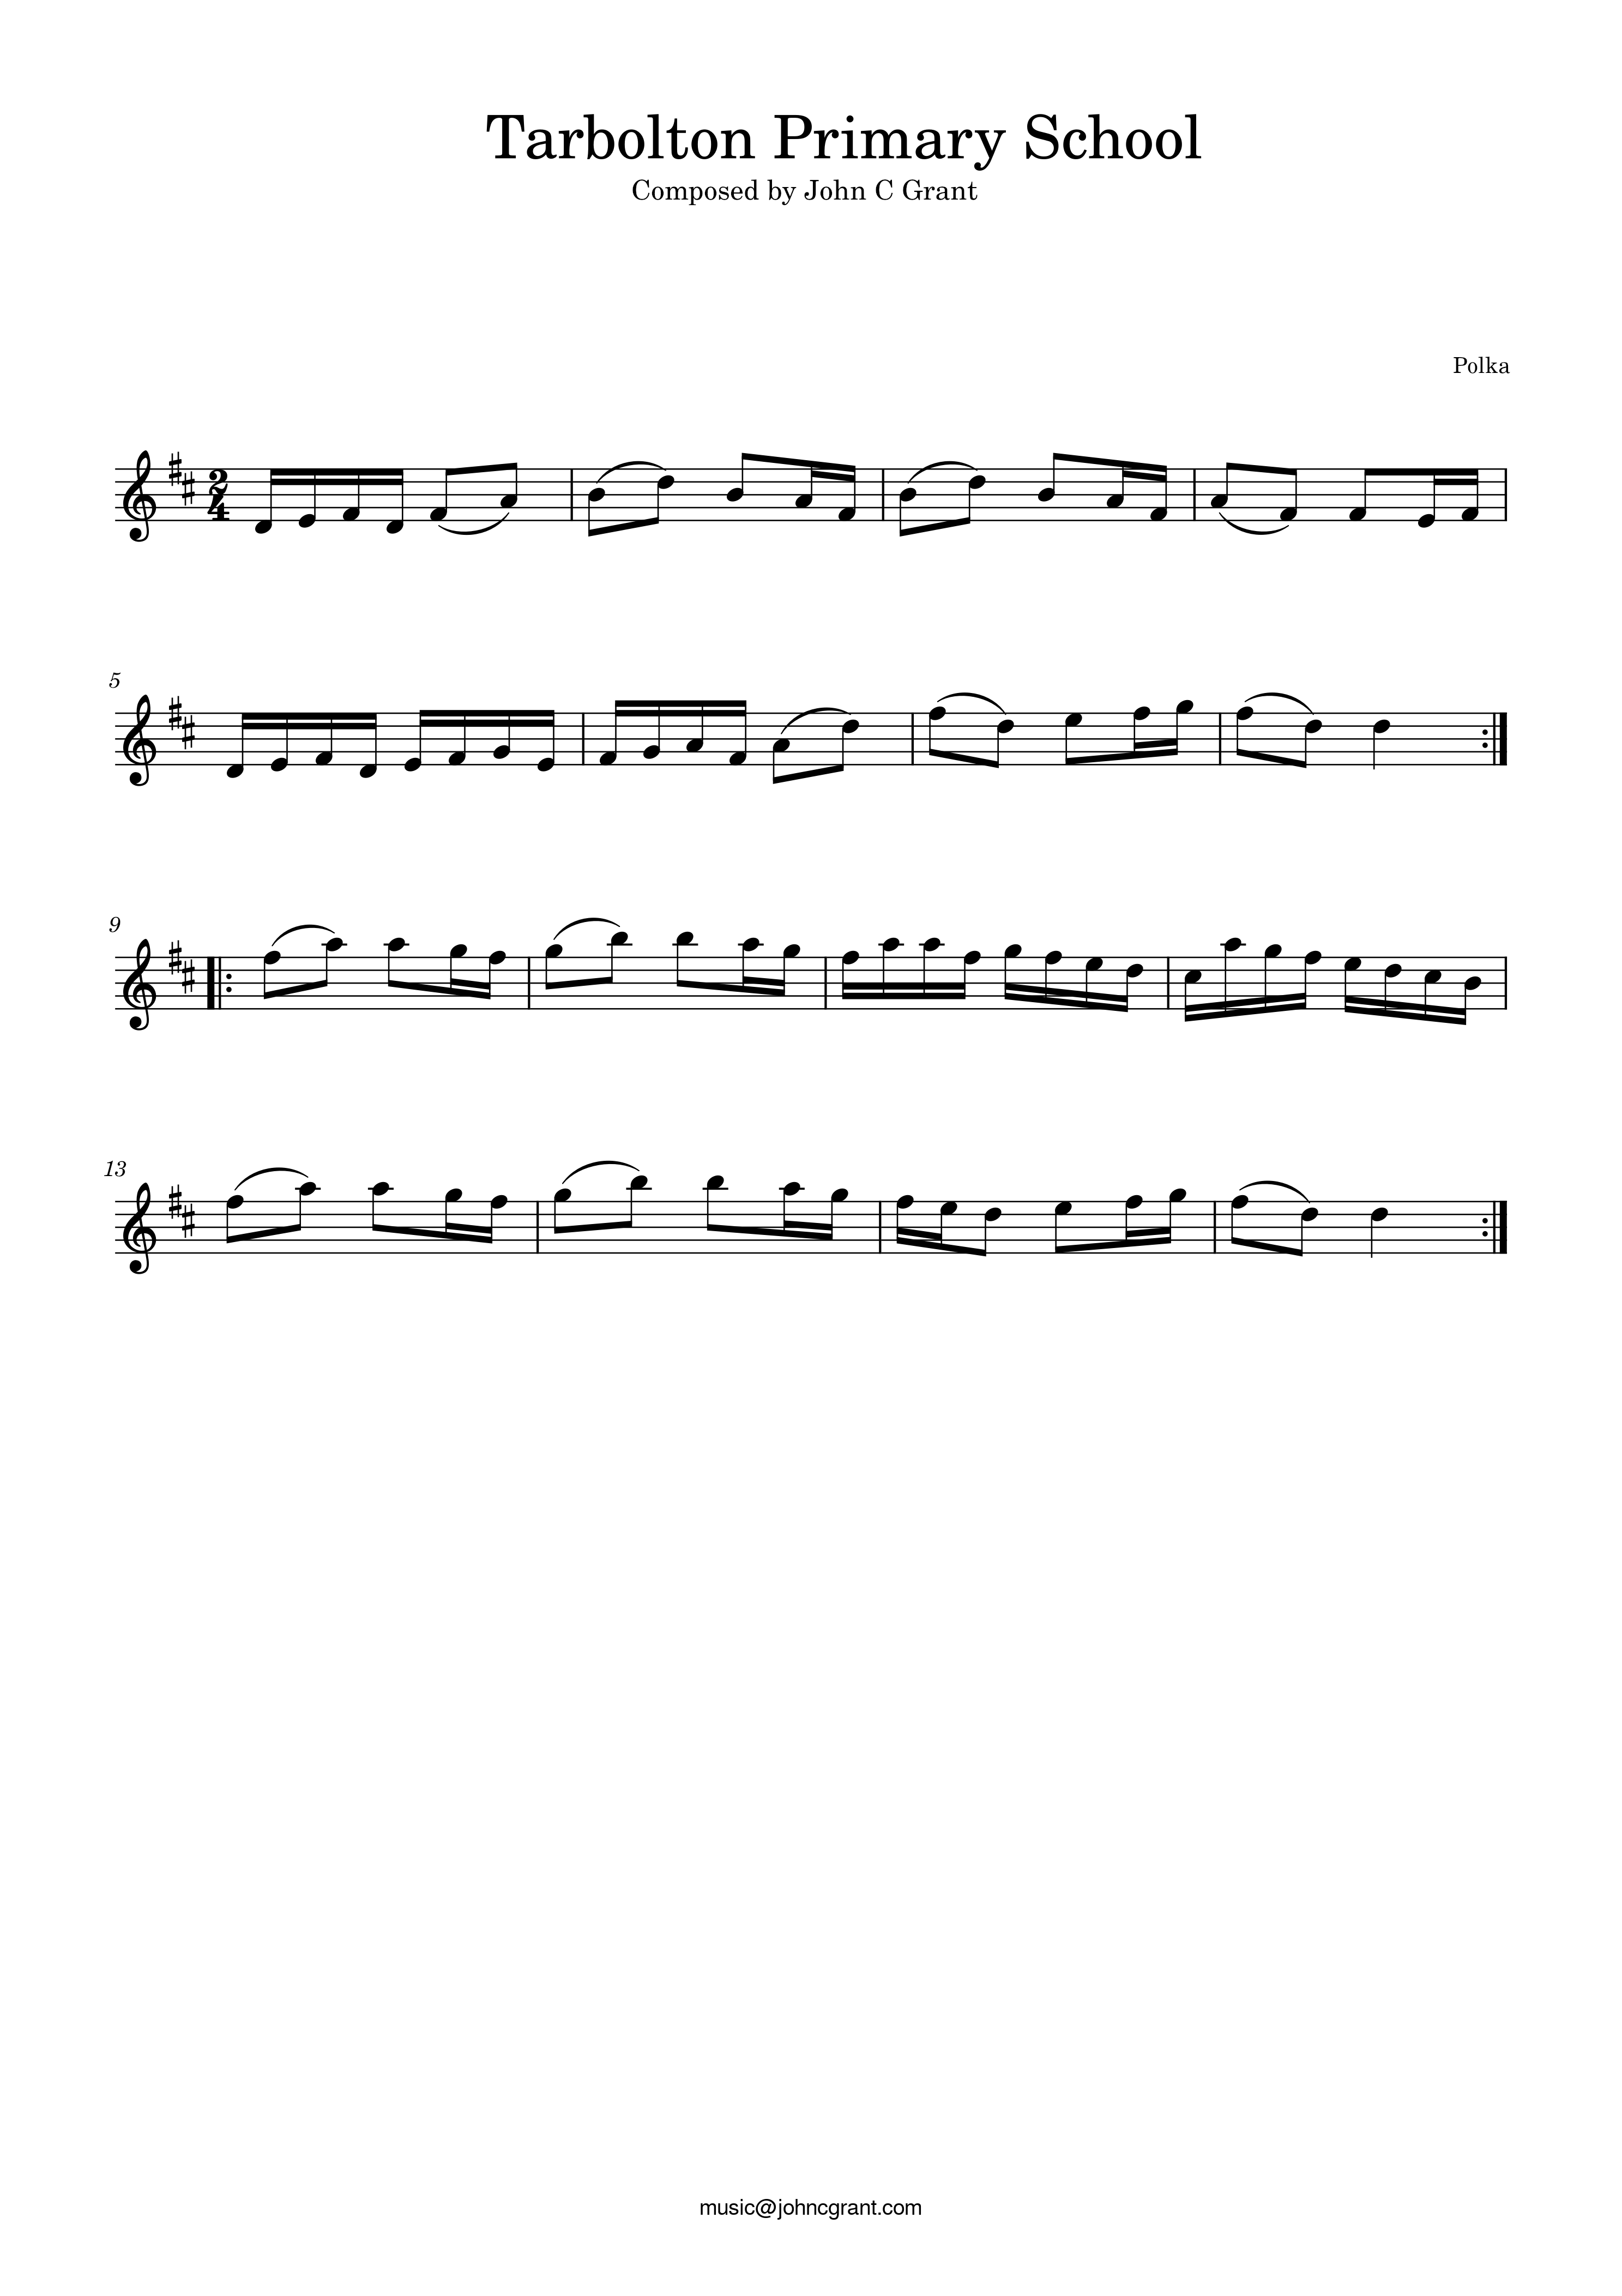 Tarbolton Primary School - Composed by John C Grant (https://johncgrant.com). Traditional composer from Kilmarnock, Ayrshire, Scotland.